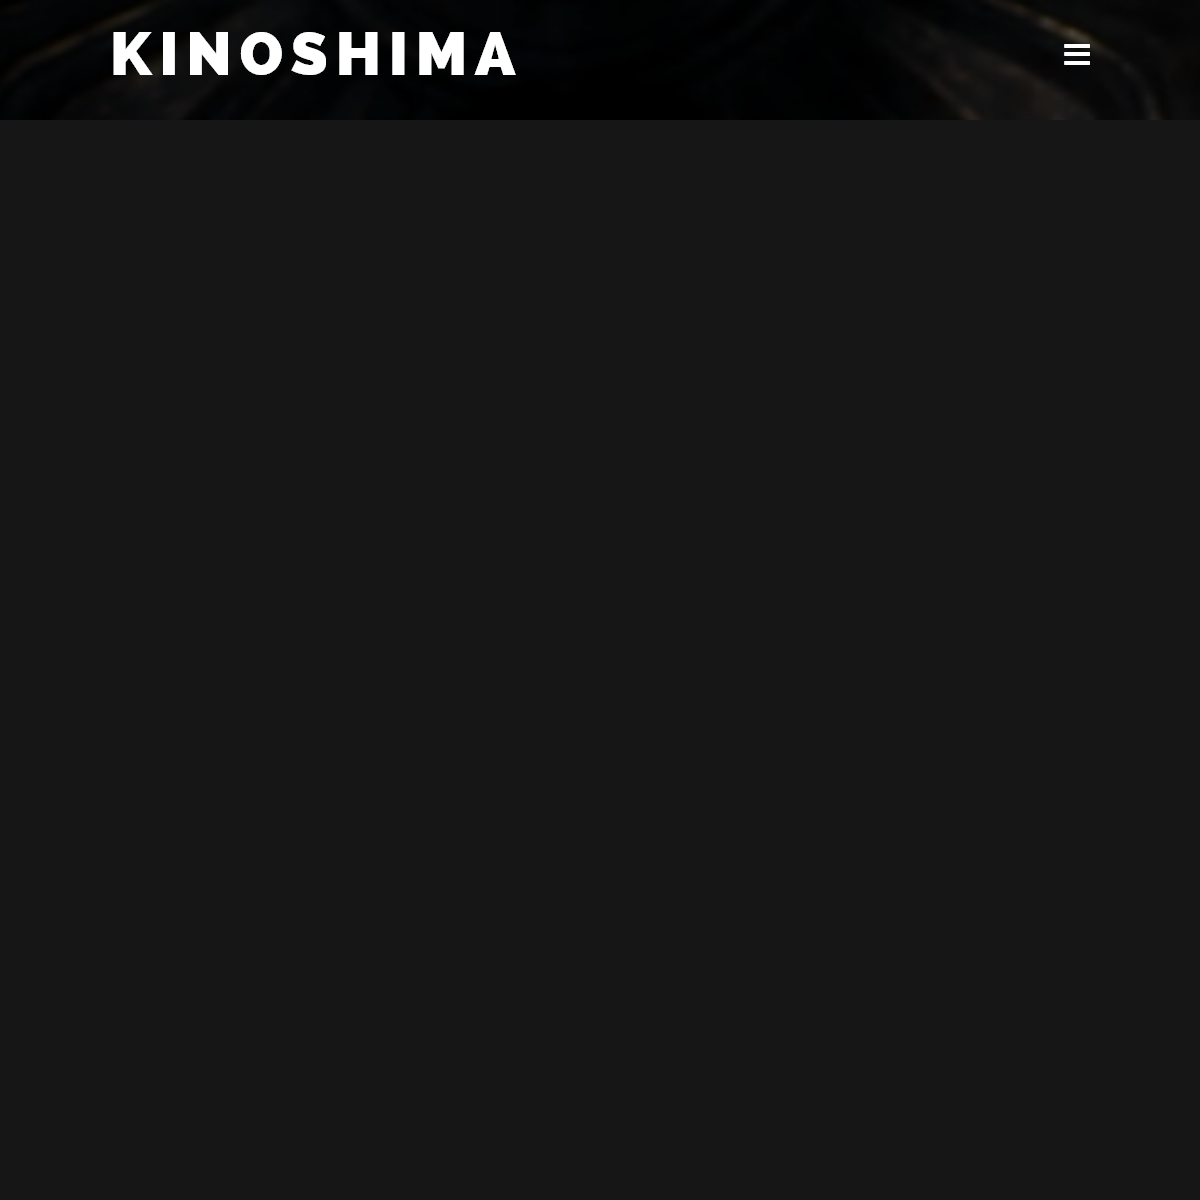 A complete backup of kinoshima.net